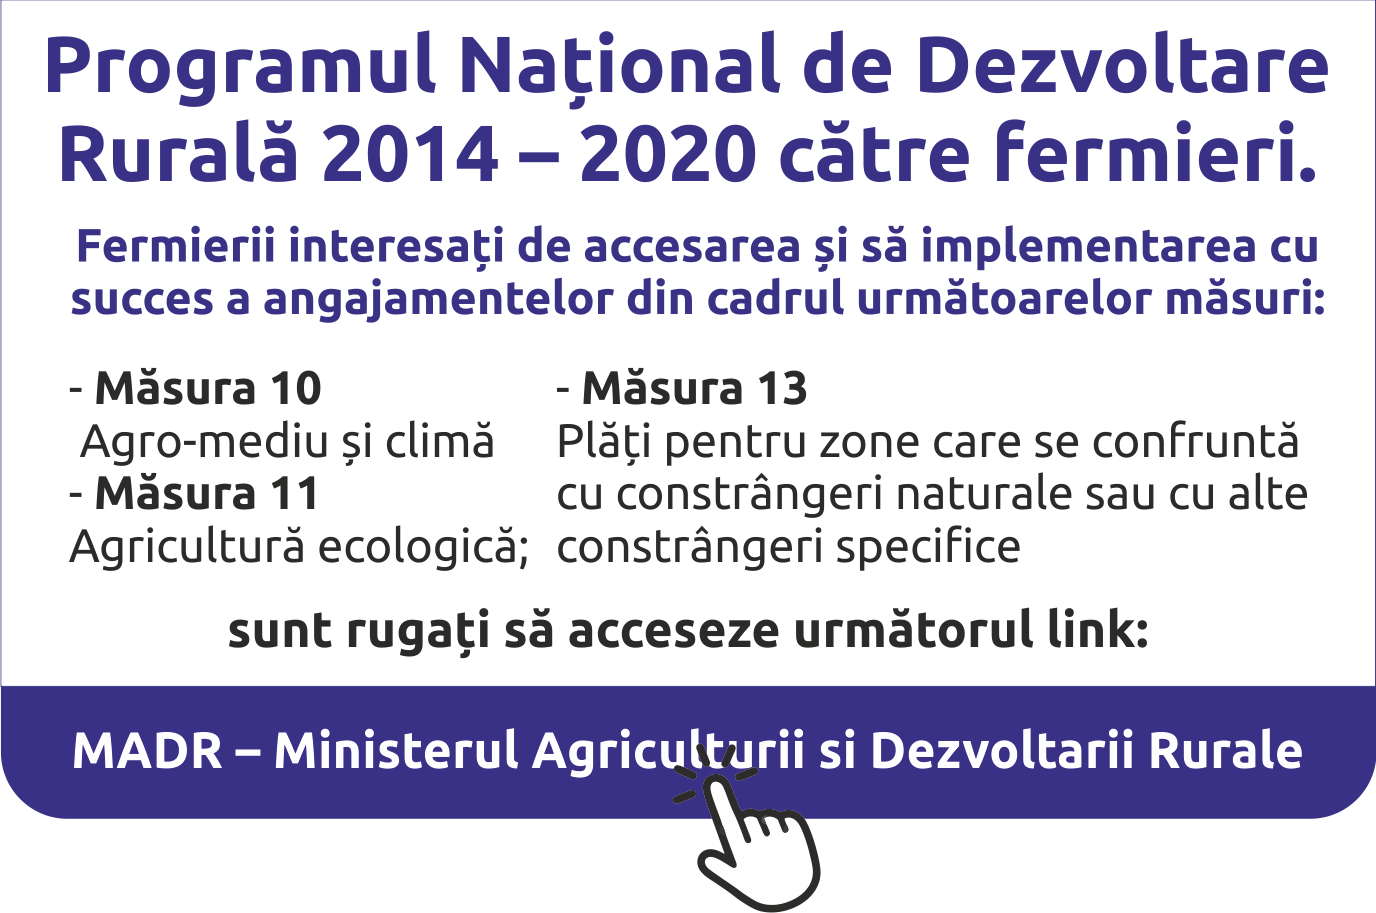 MADR - Ministerul Agriculturii si Dezvoltarii Rurale 